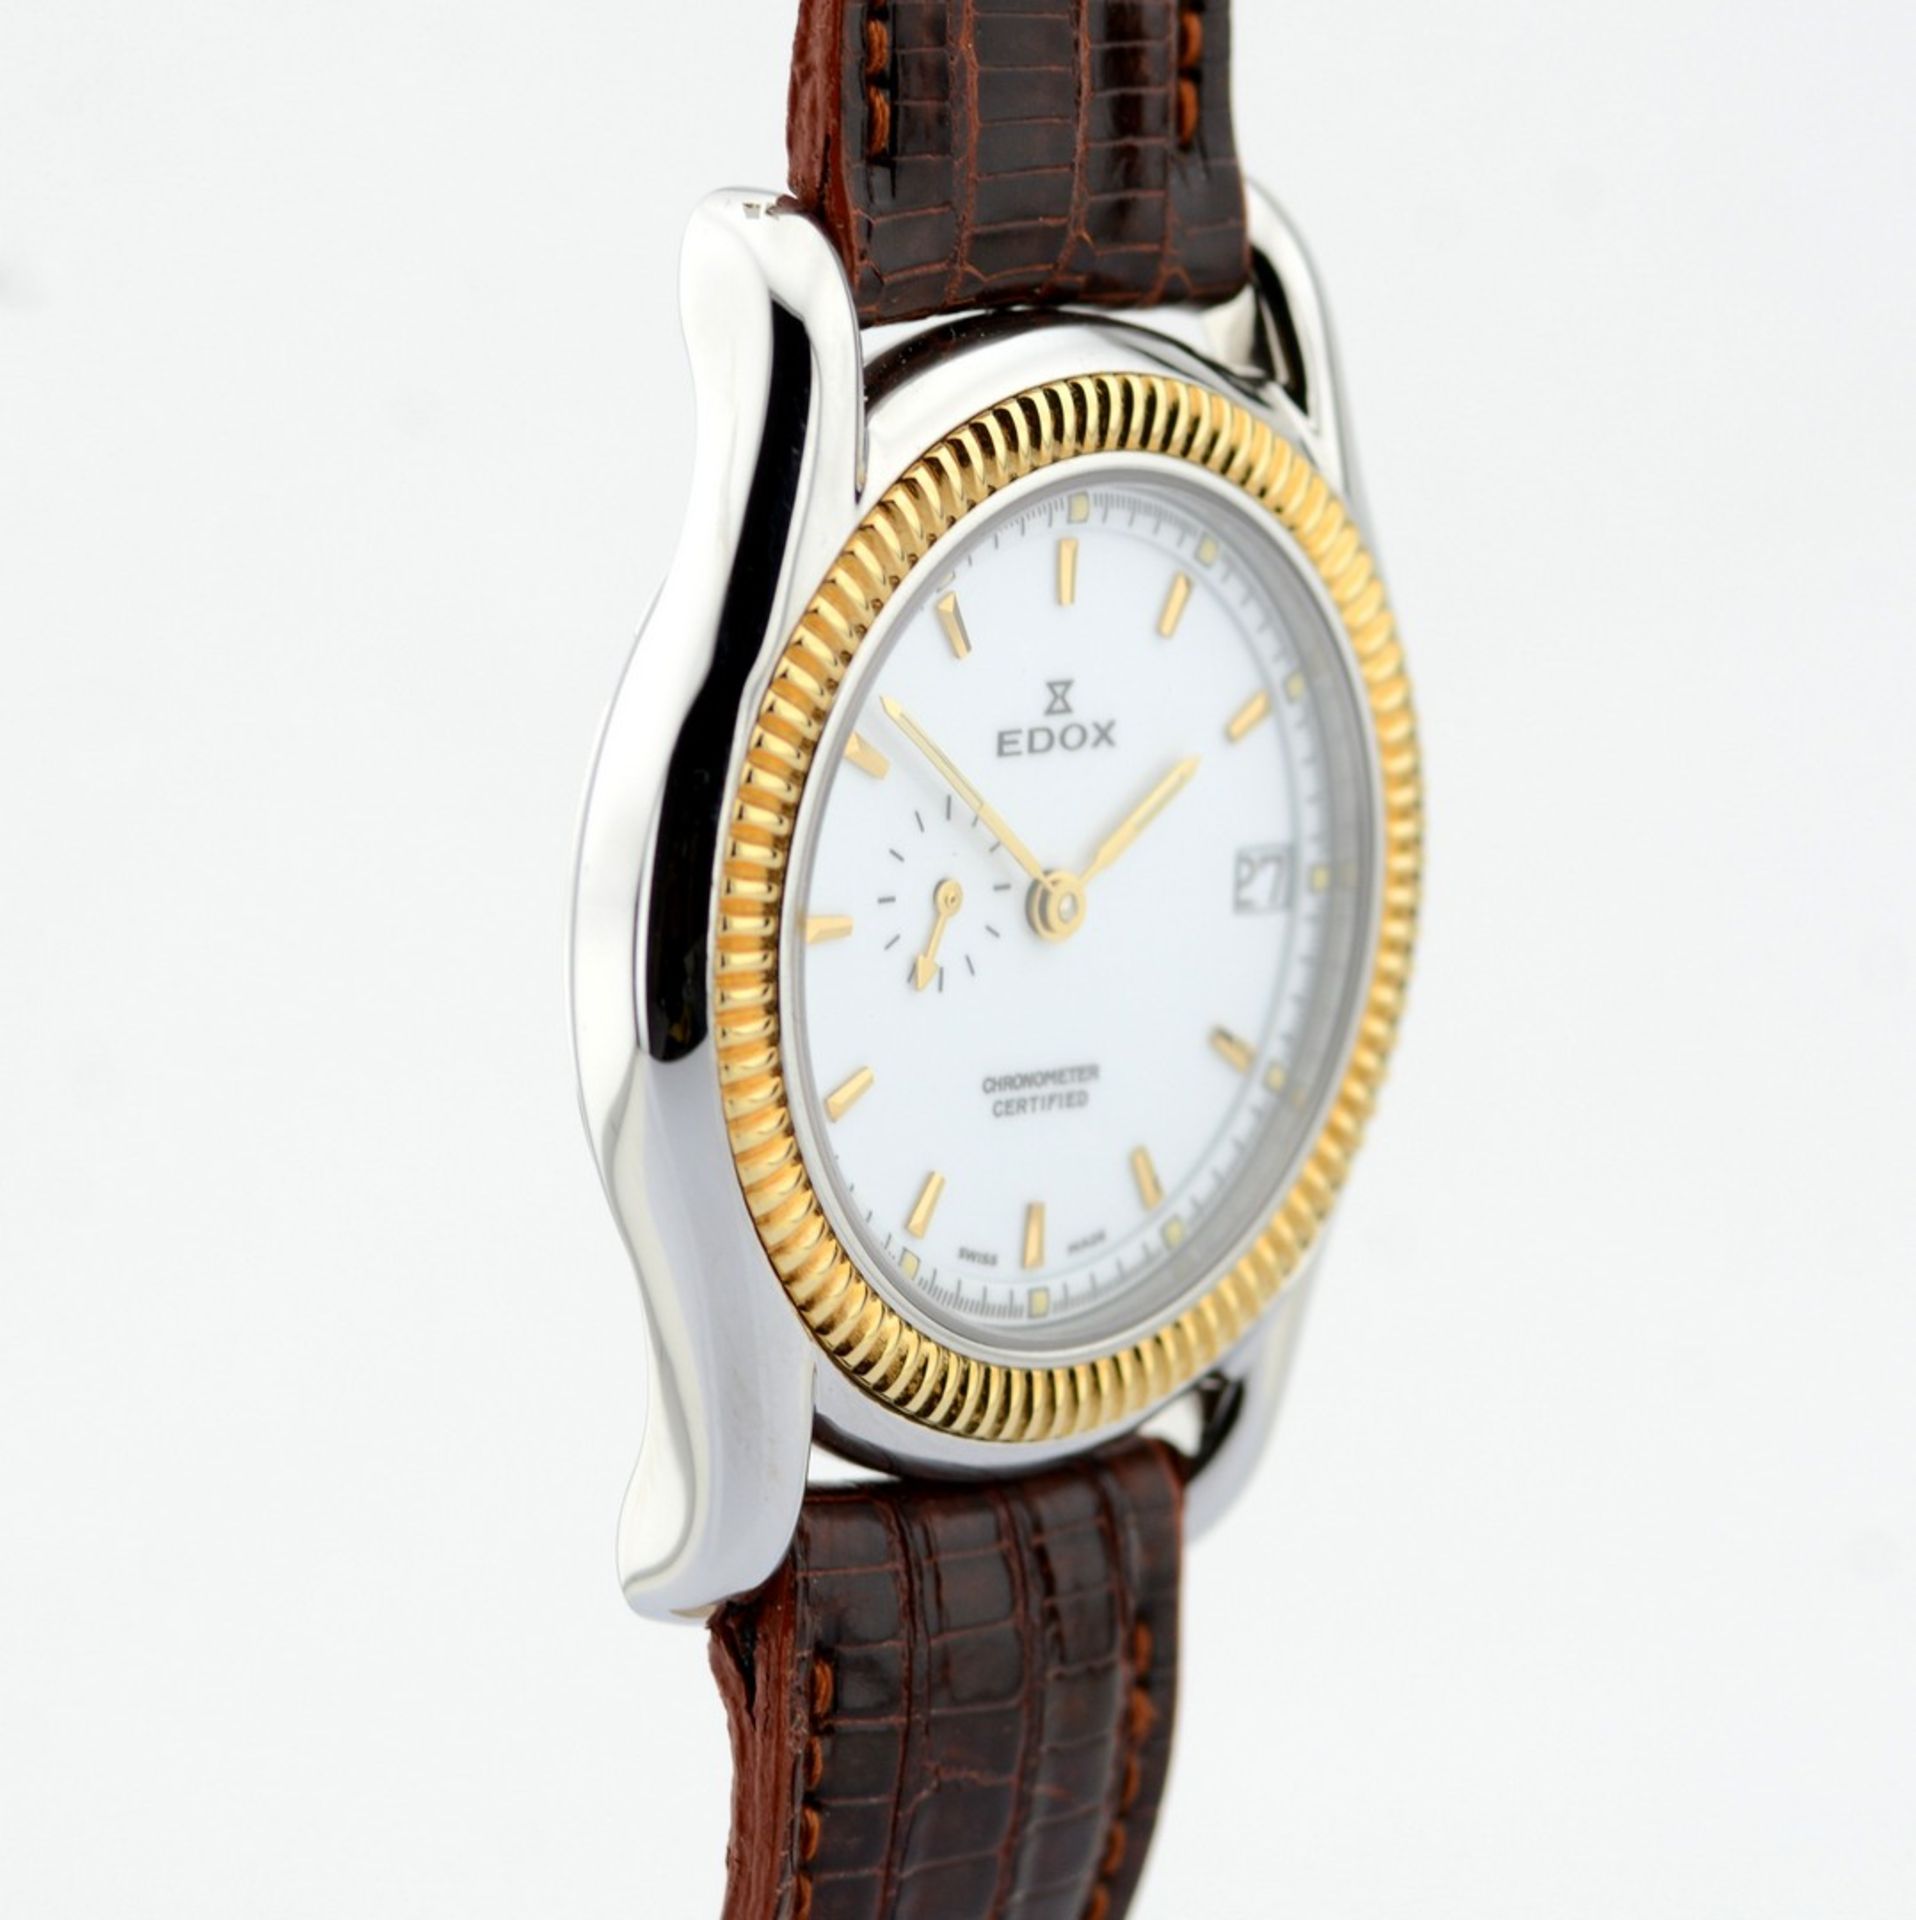 Edox / Chronometer Certified Automatic Date - Gentlemen's Gold/Steel Wristwatch - Image 3 of 8